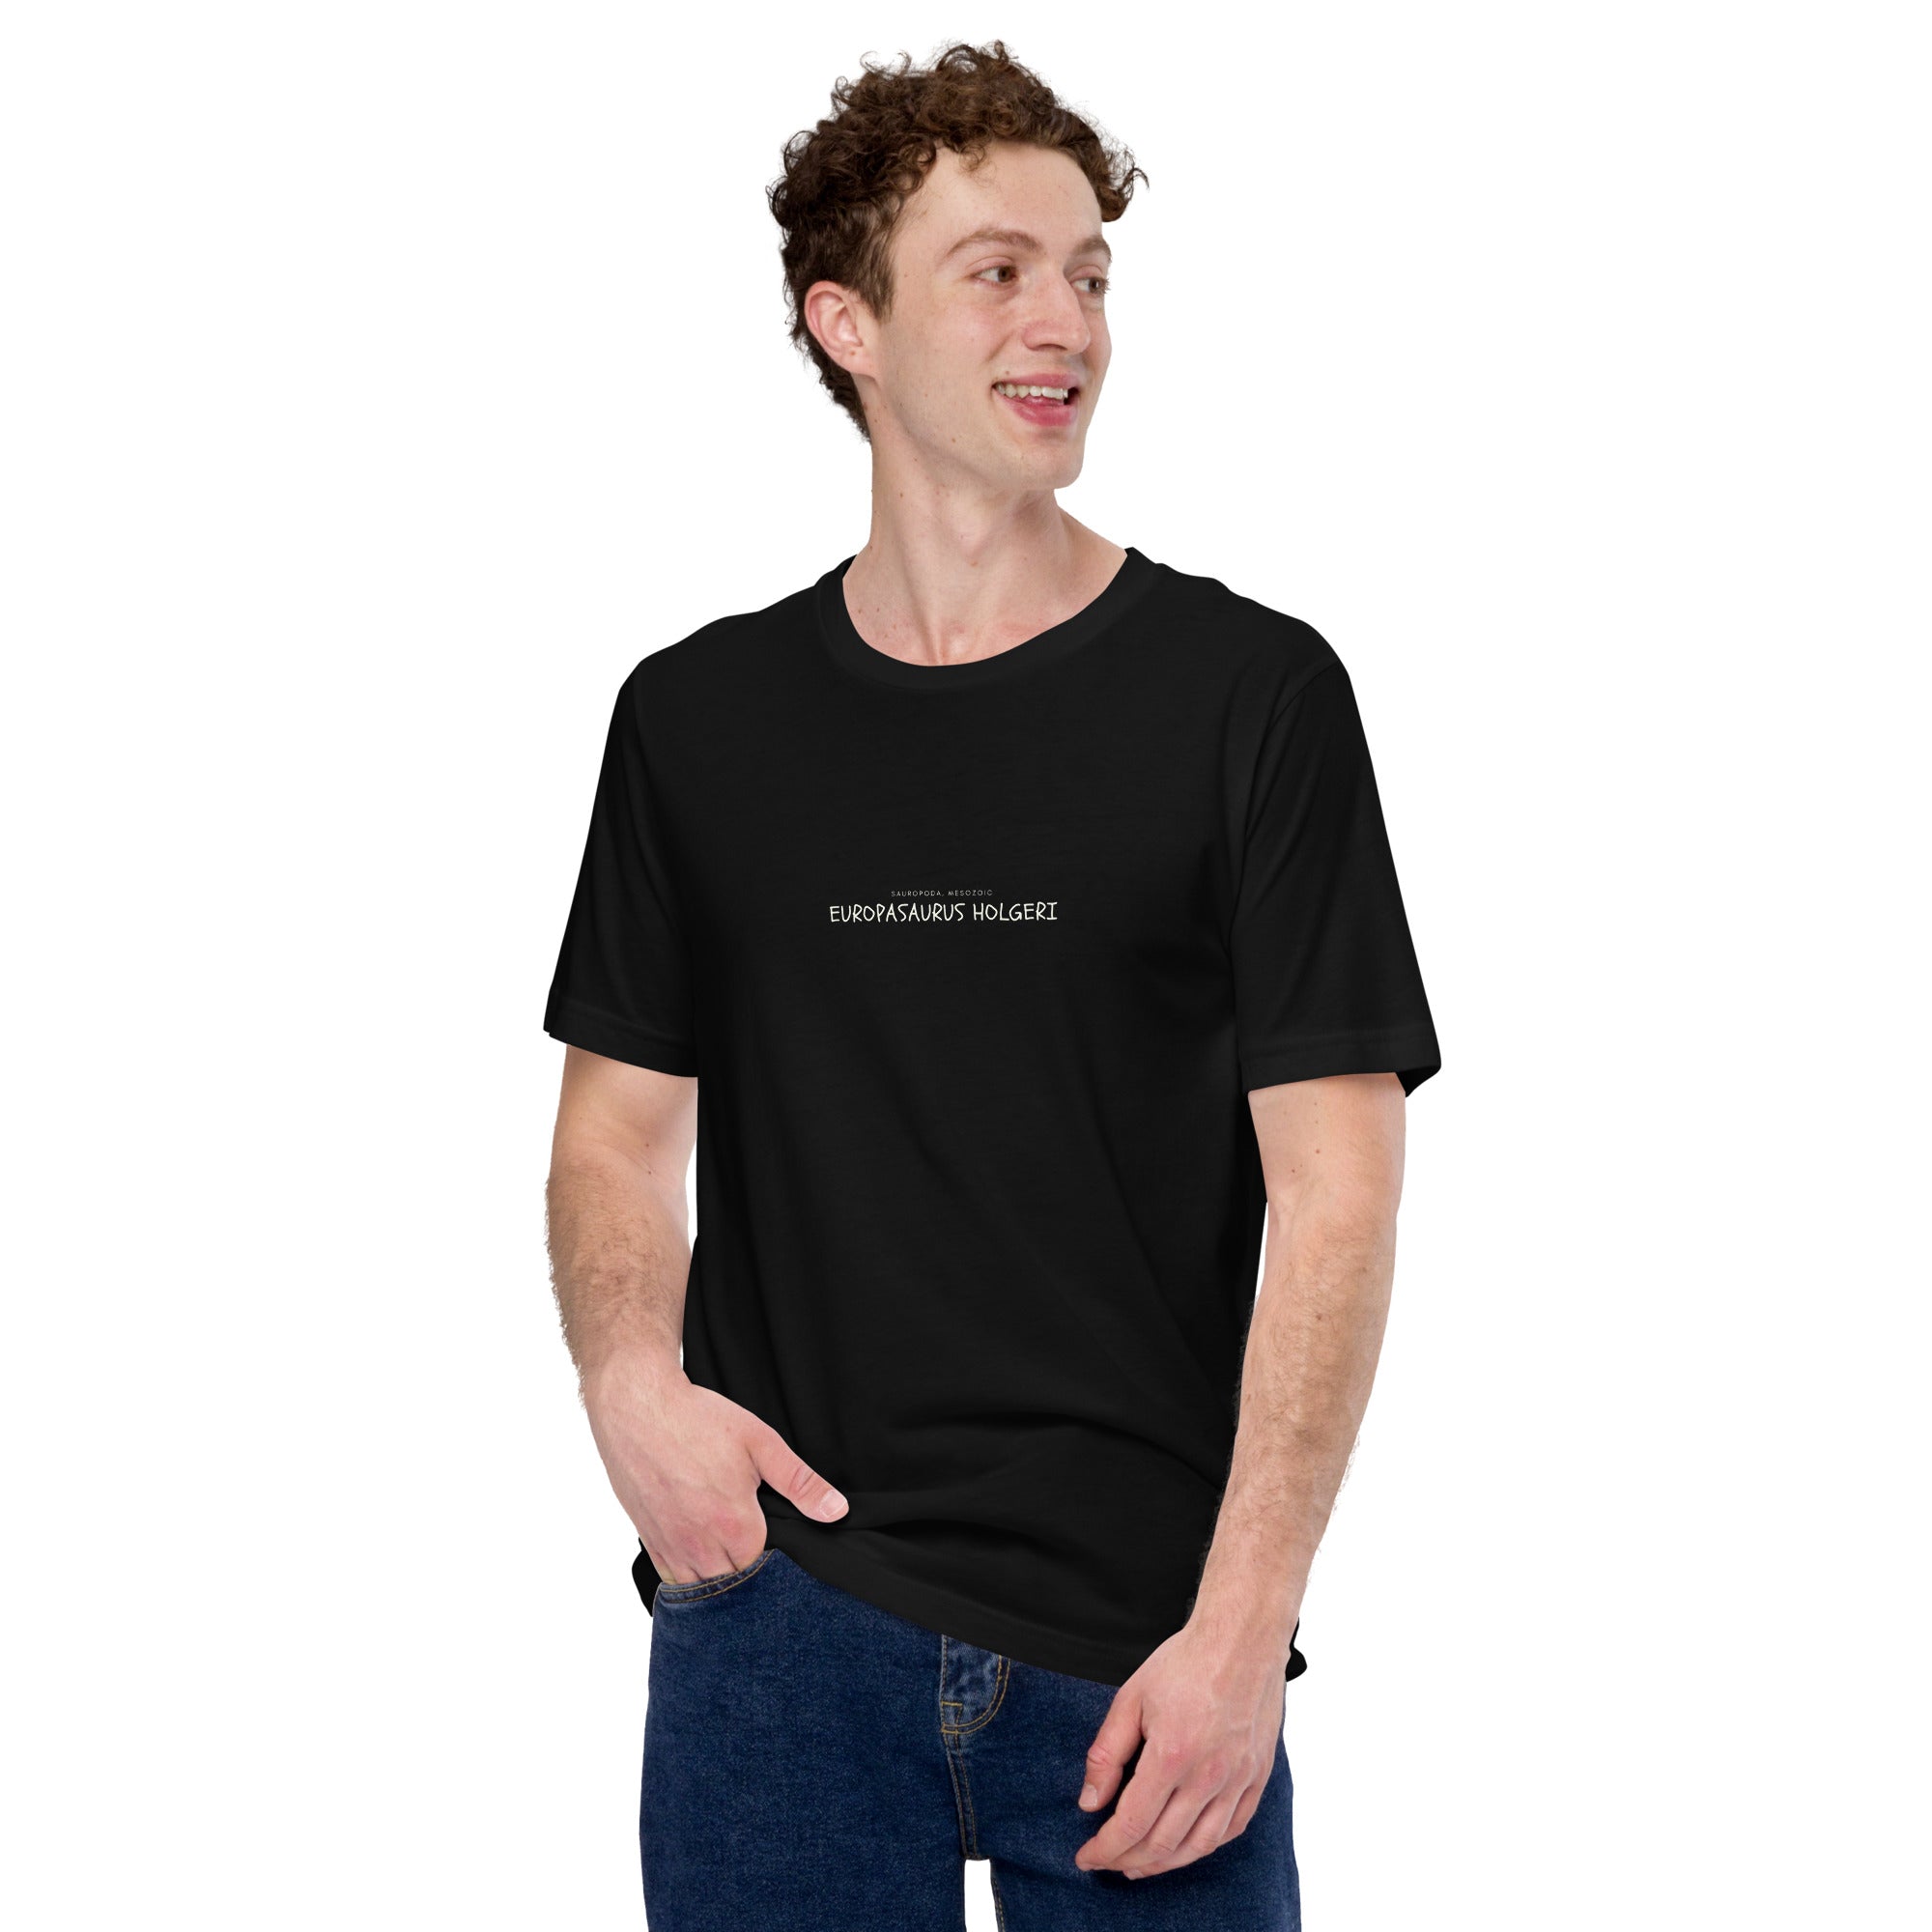 Unisex t-shirt with "Europasaurus holgeri" text